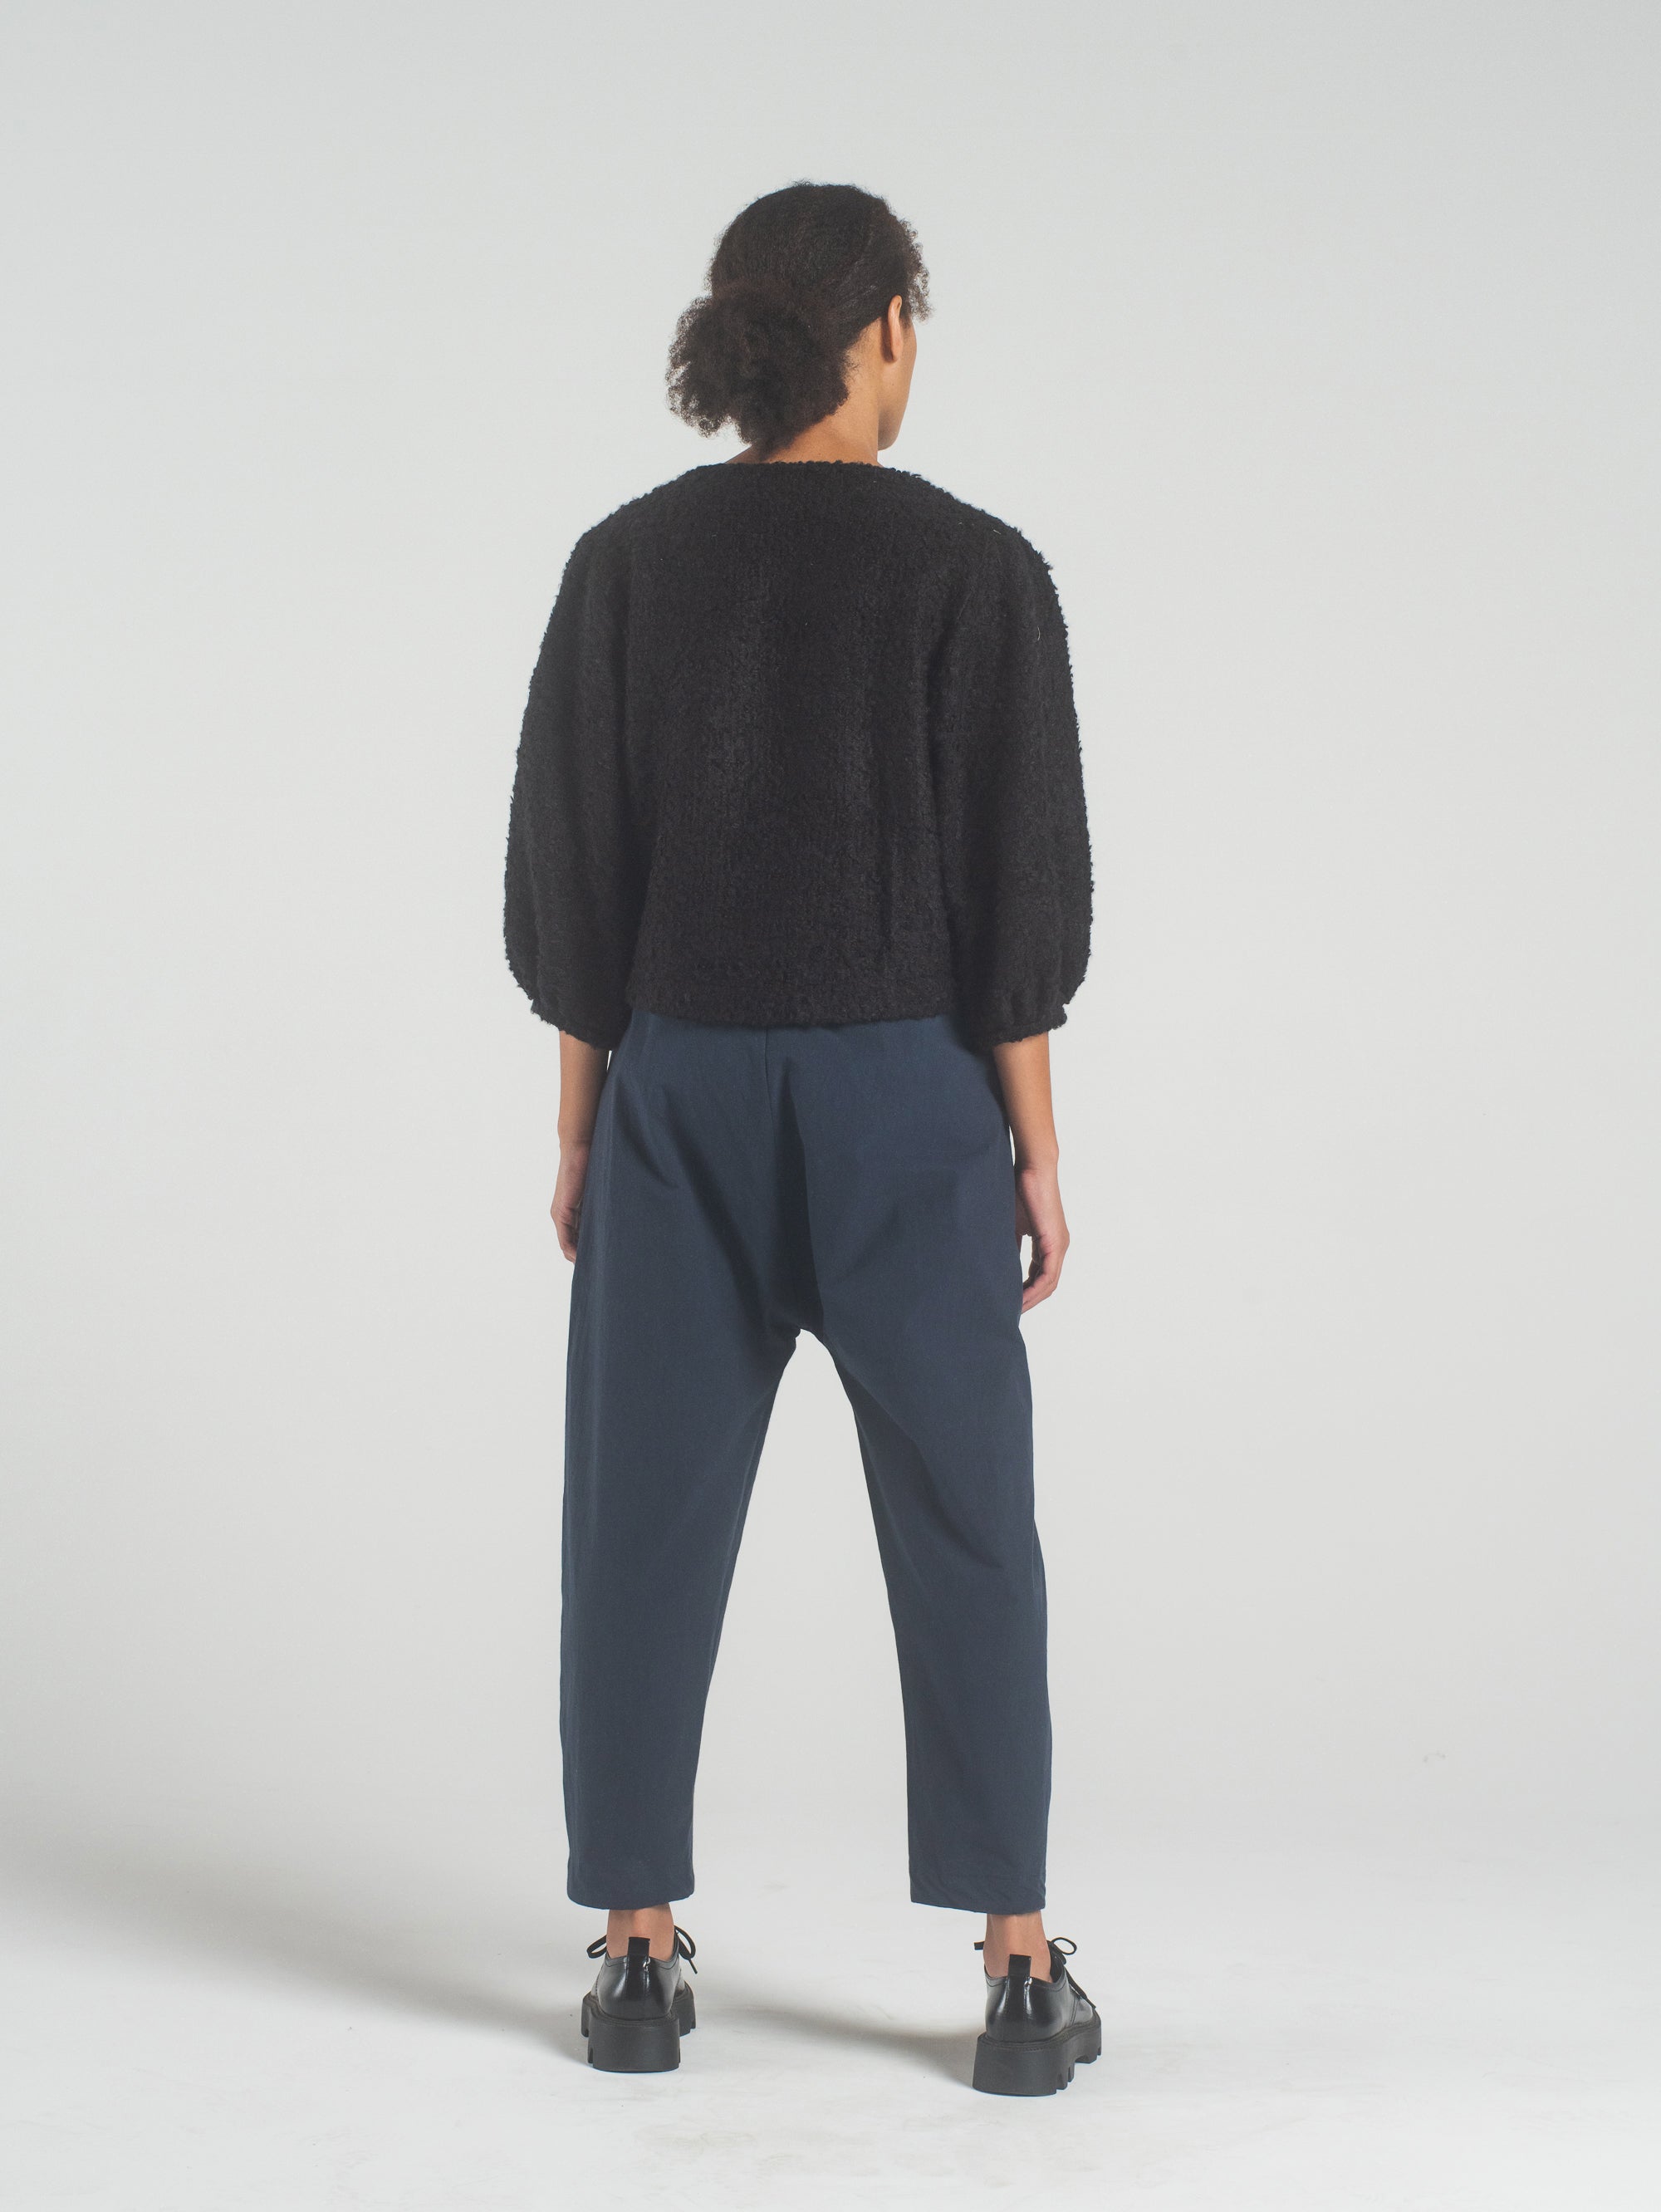 SAMPLE SALE - Dasha Sweater in Black Boucle - SMALL